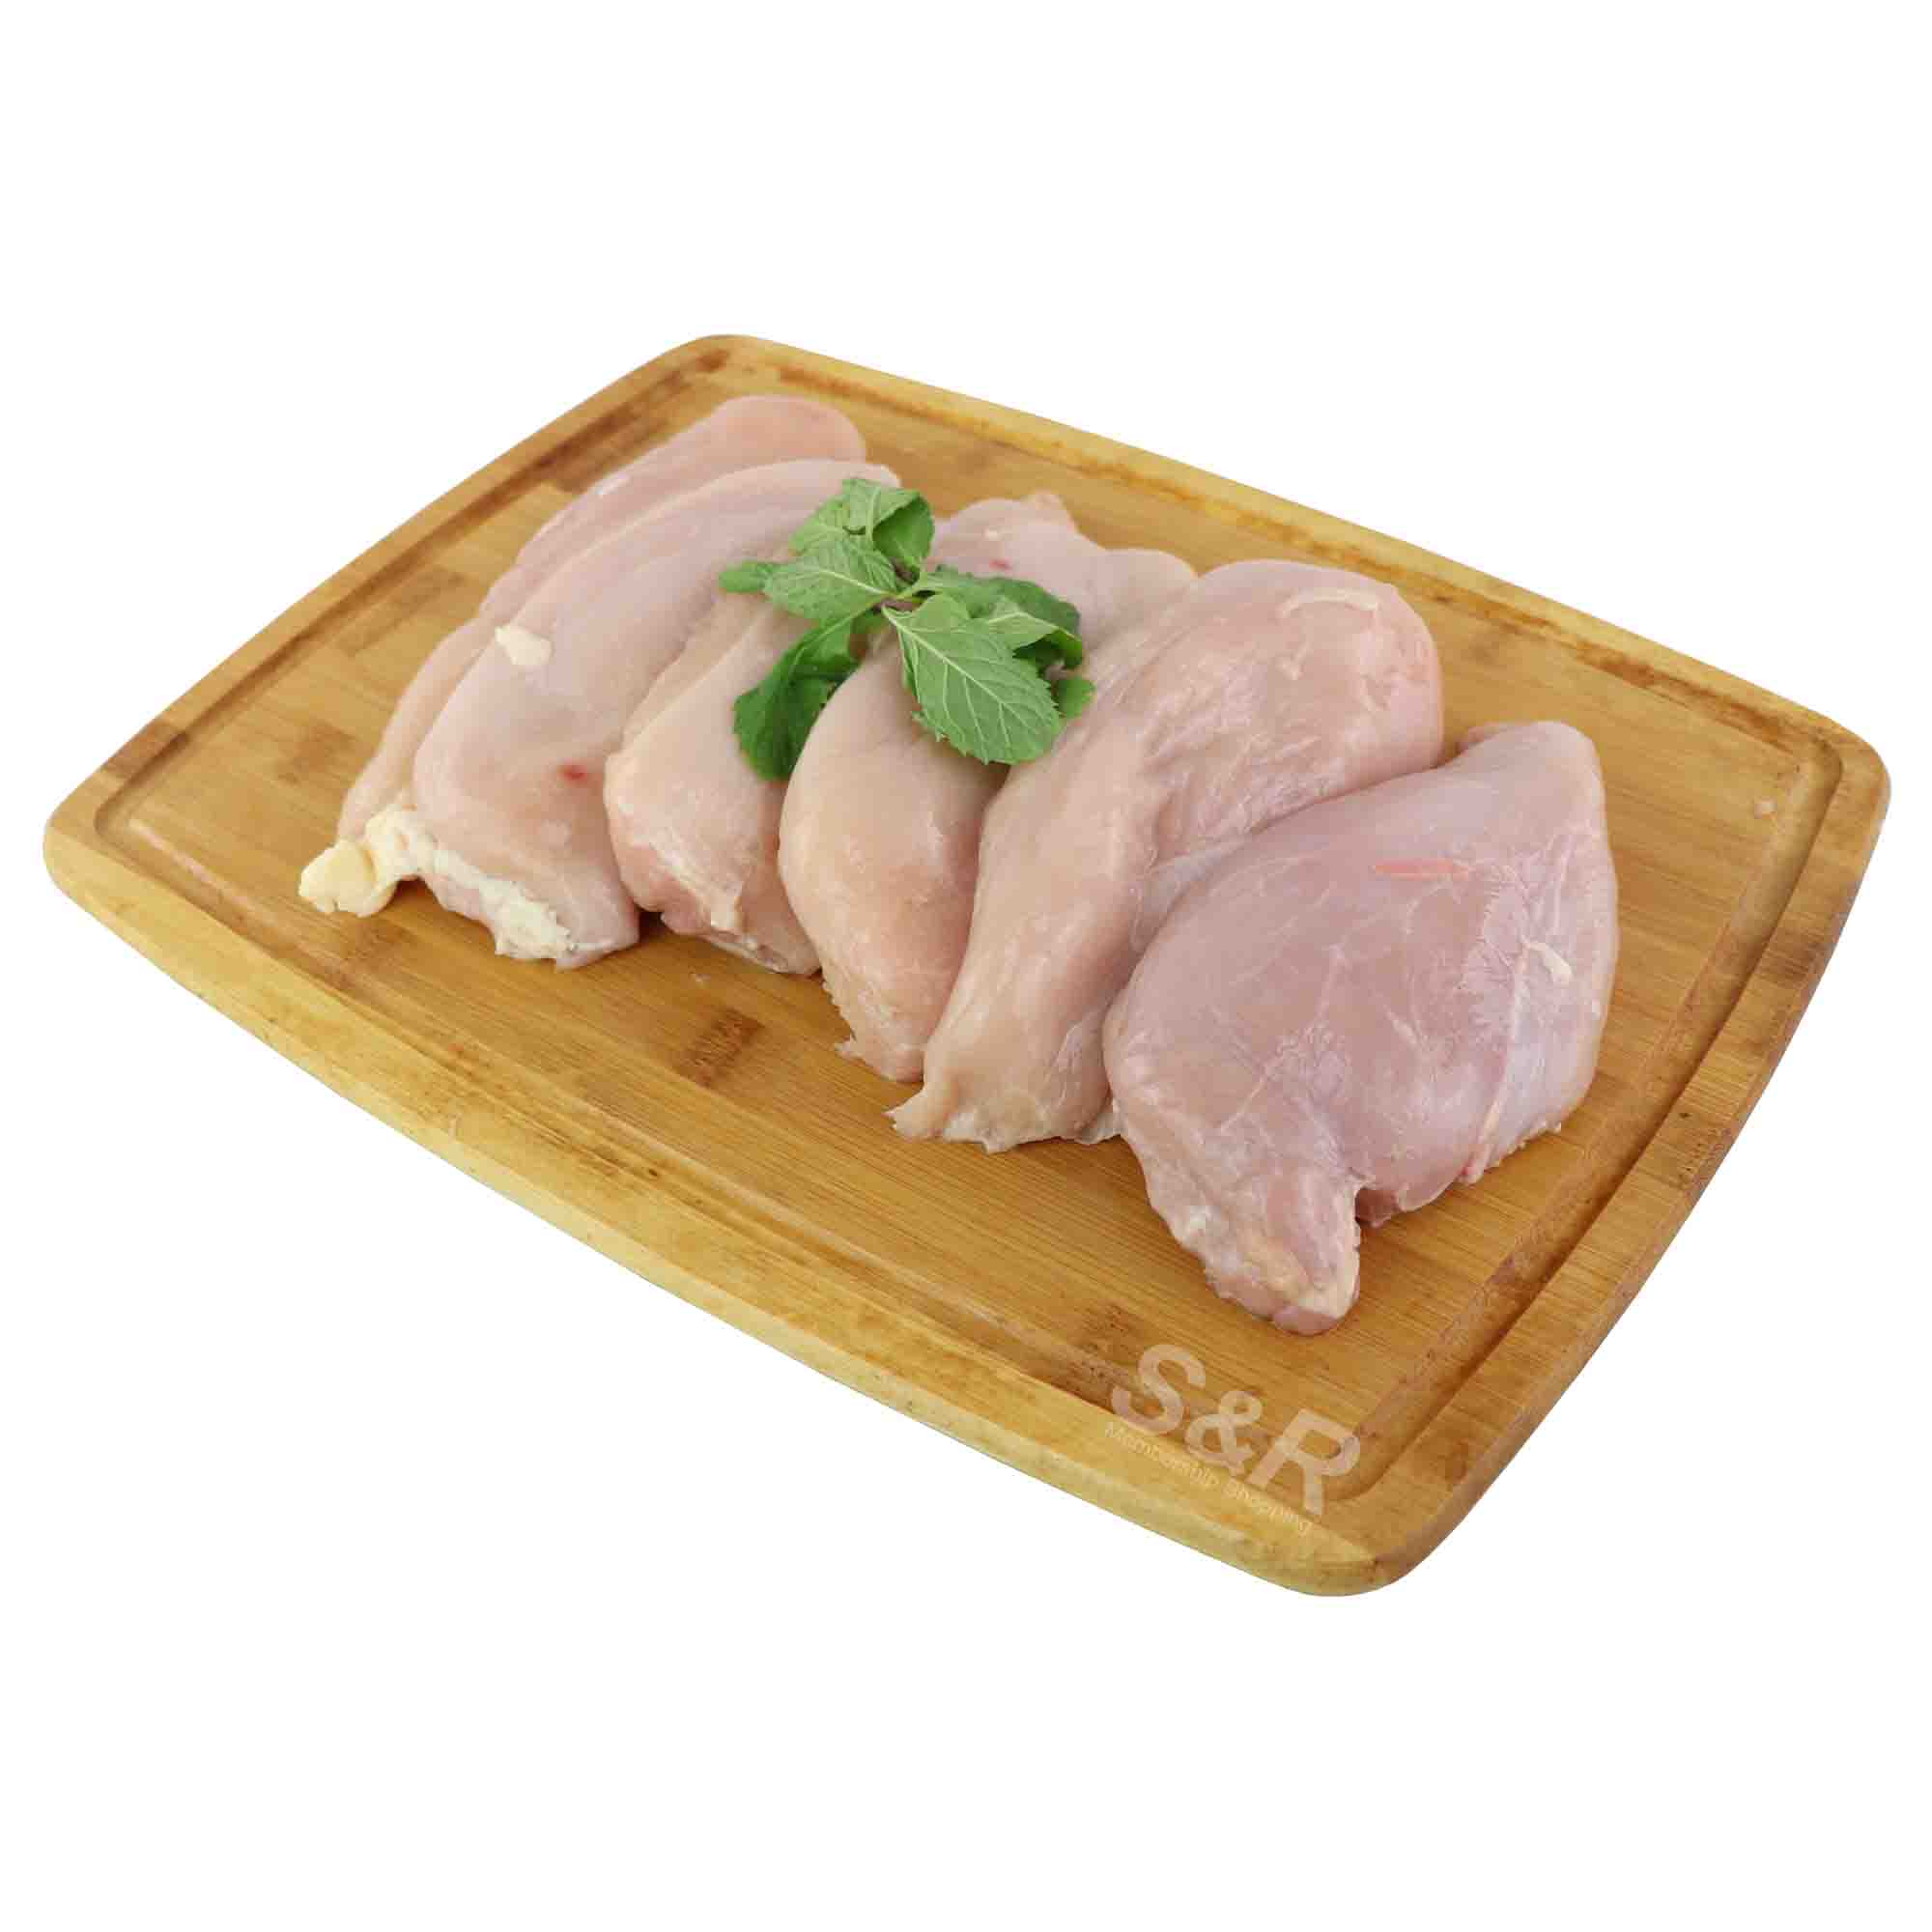 Members' Value Skinless Chicken Breast Fillet approx. 2.5kg